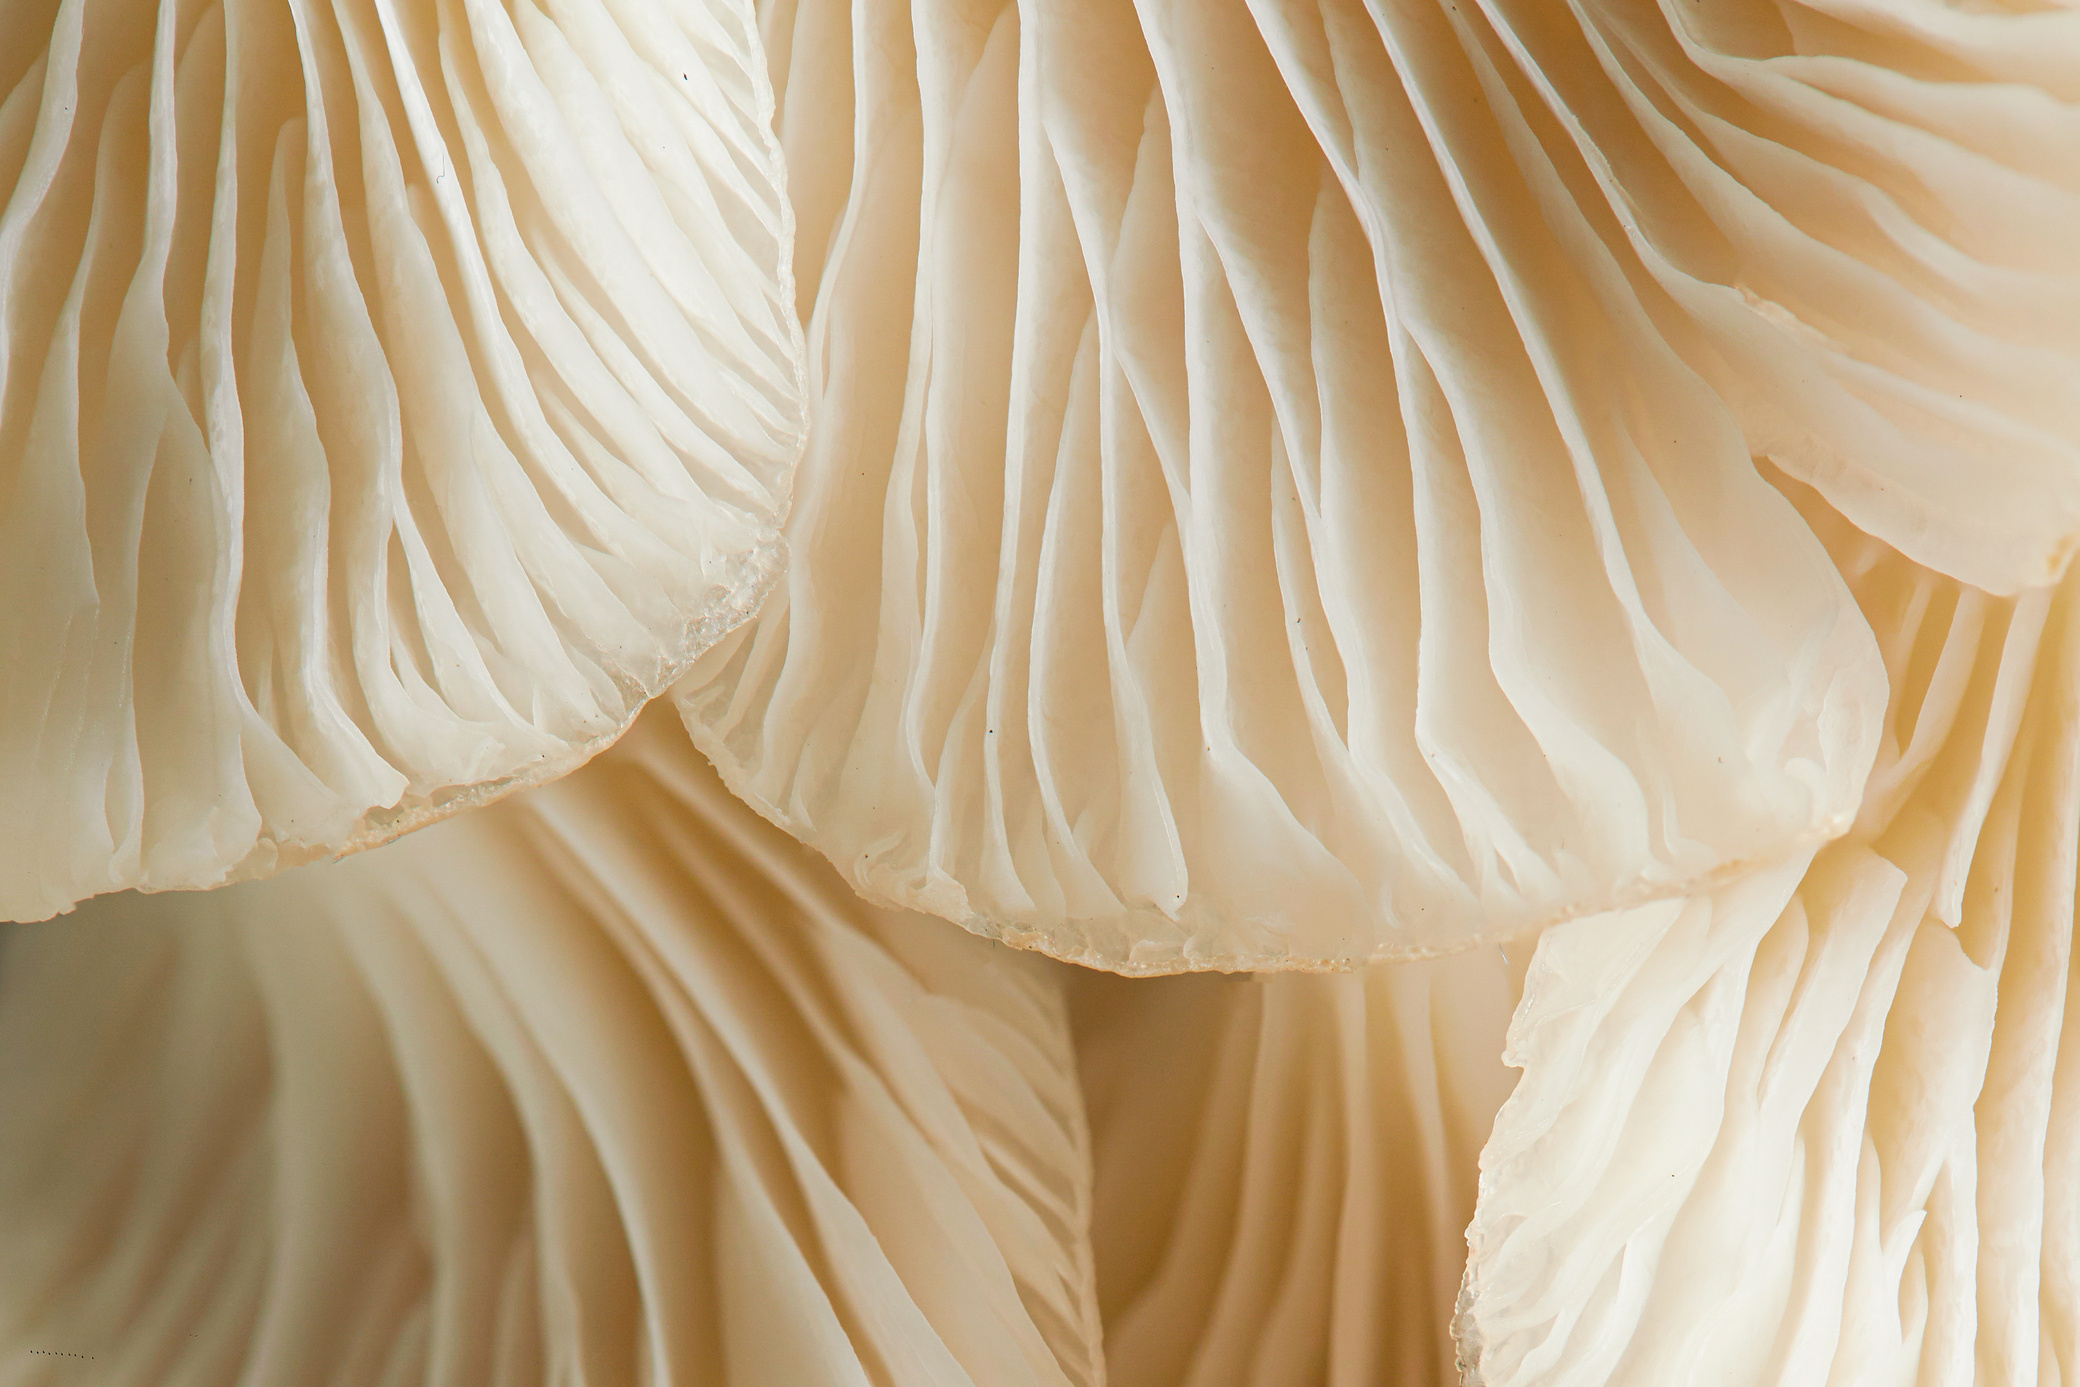 Mushroom Gills Closeup